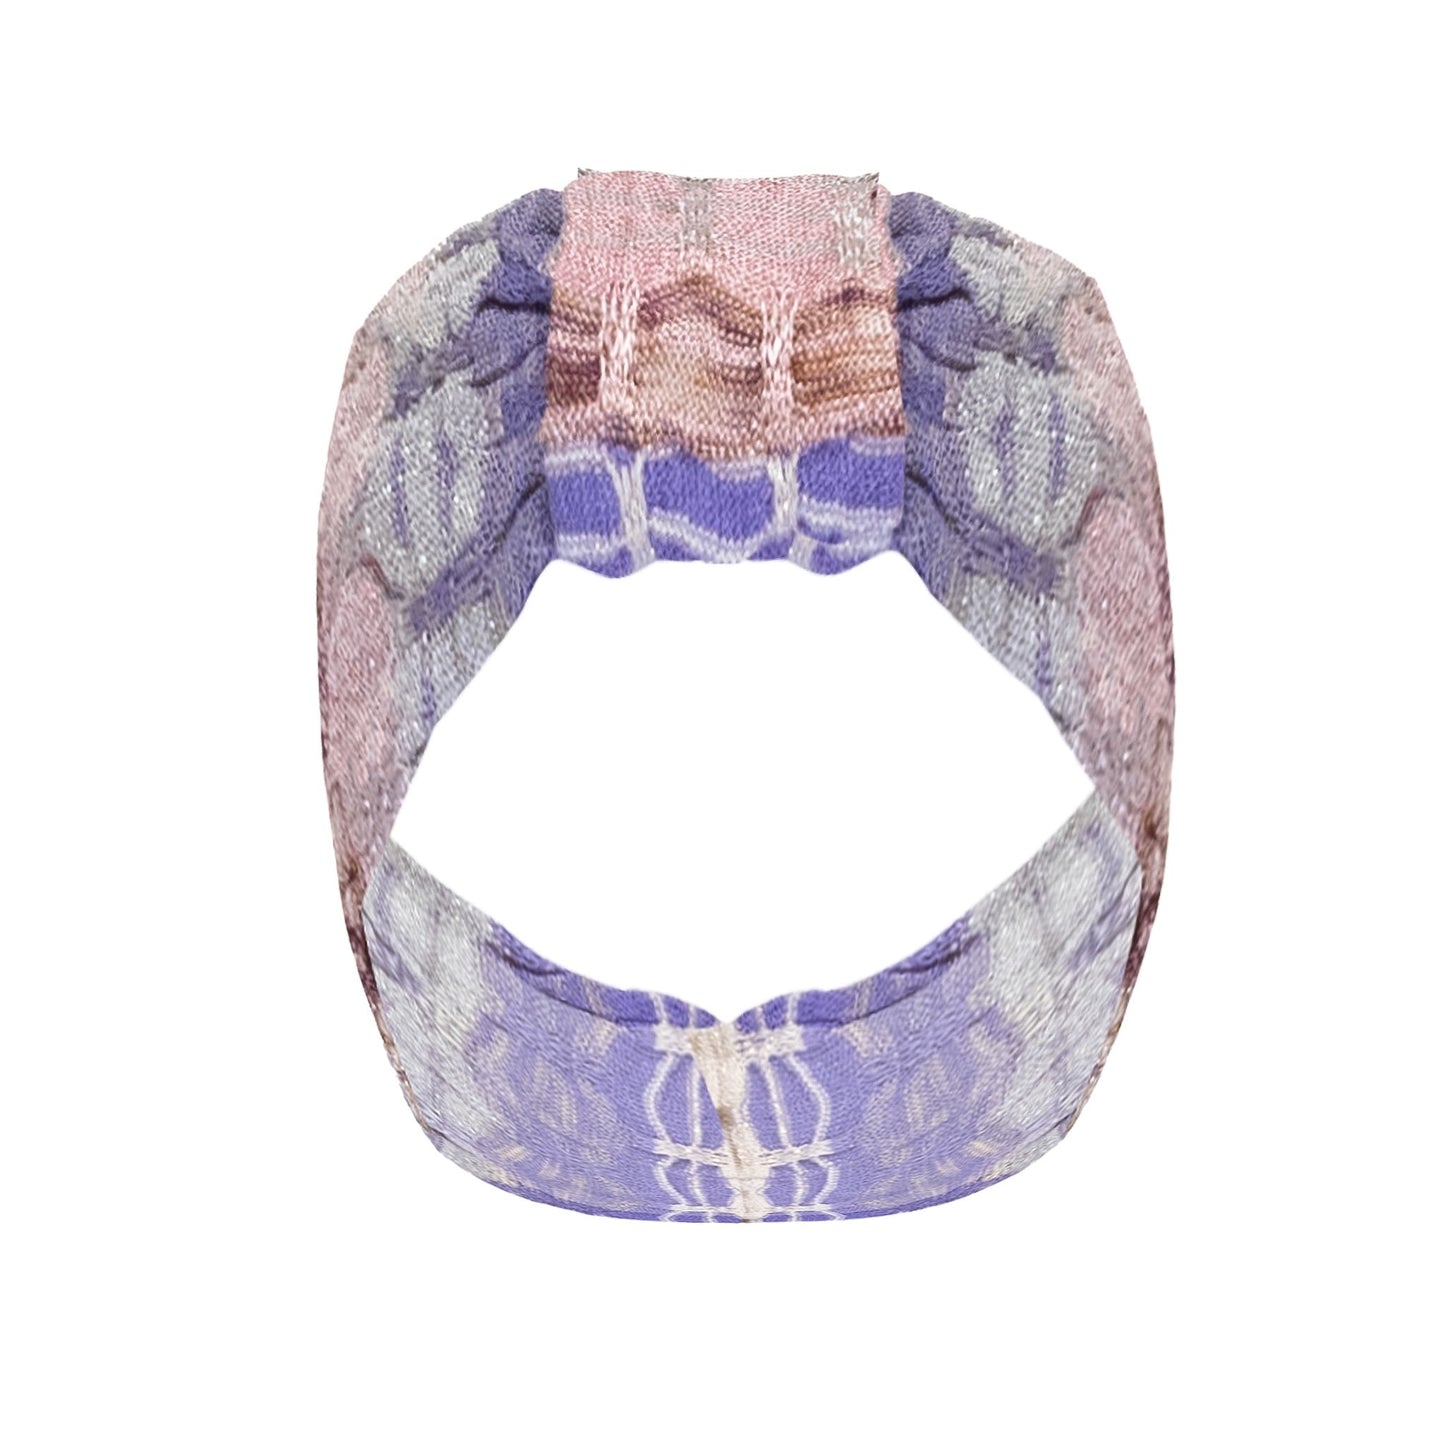 Headband in Honeycomb Knit Purple